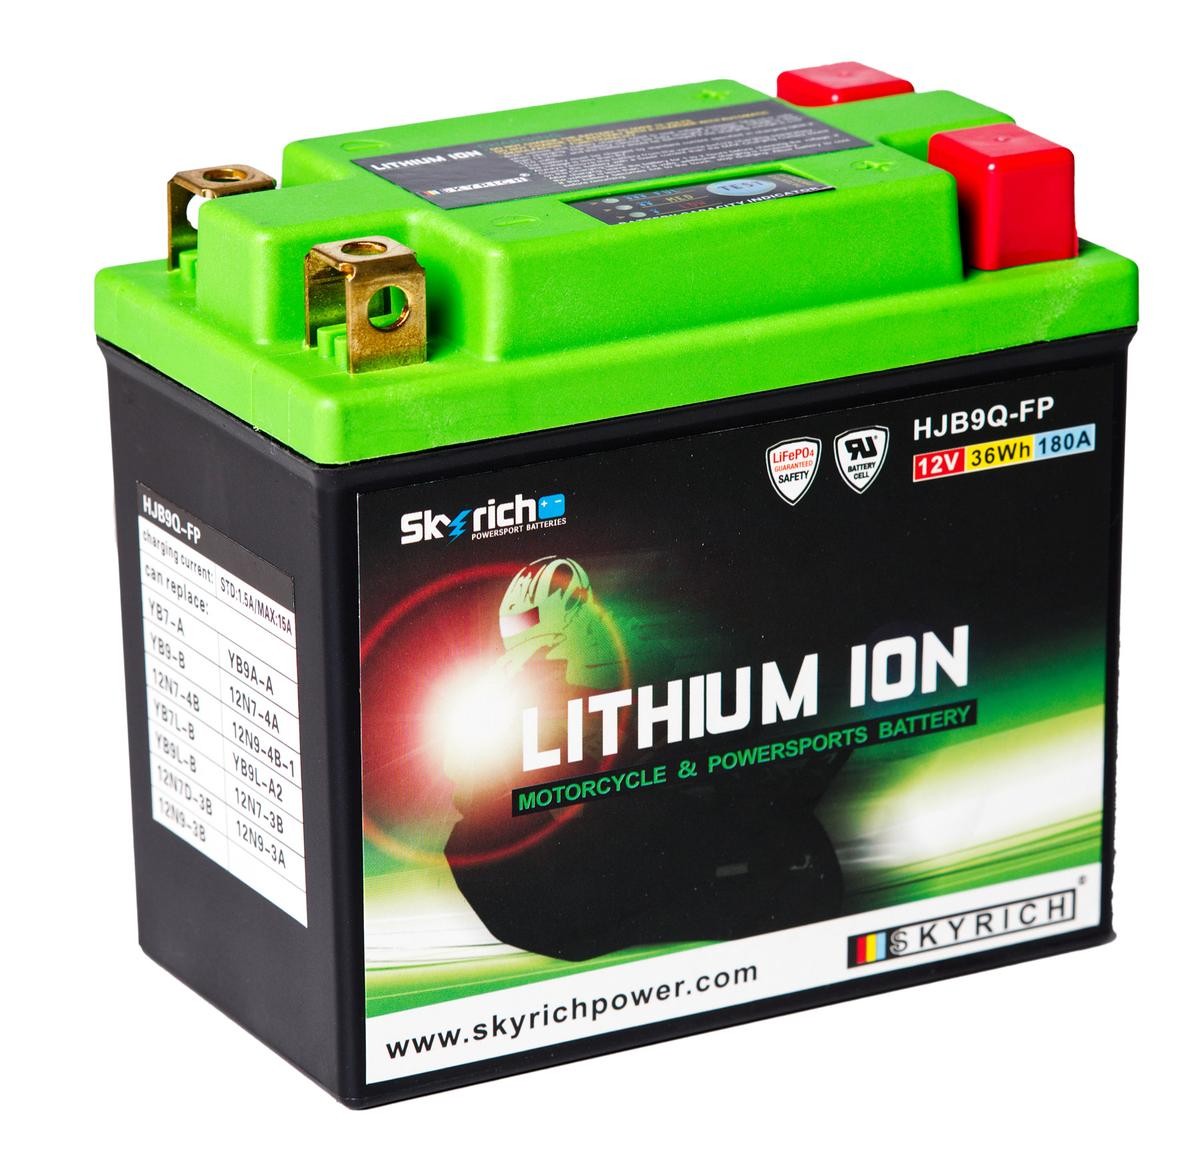 TRIUMPH TIGER Batterie 12V 3Ah 180A N Li-Ionen-Batterie SKYRICH LITHIUM ION HJB9Q-FP